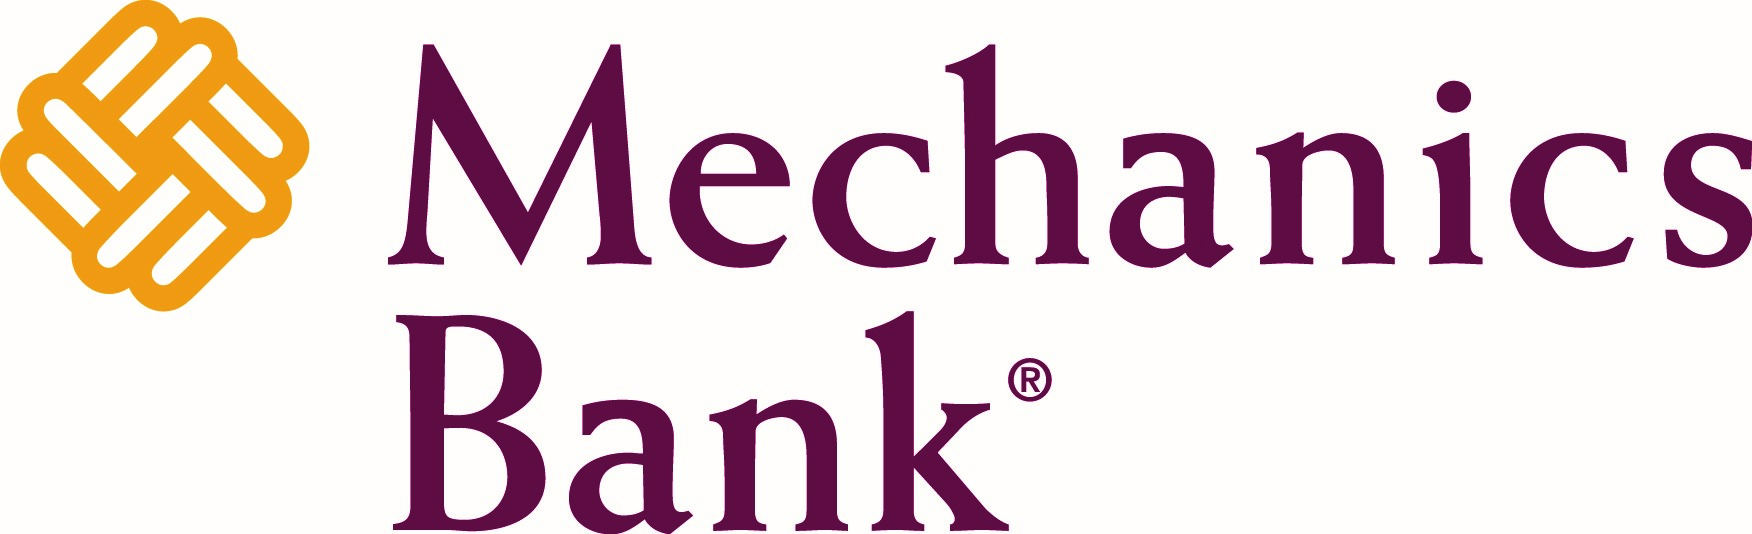 Mechanics Bank - Presenting Sponsor of the Lafayette Art & Wine Festival